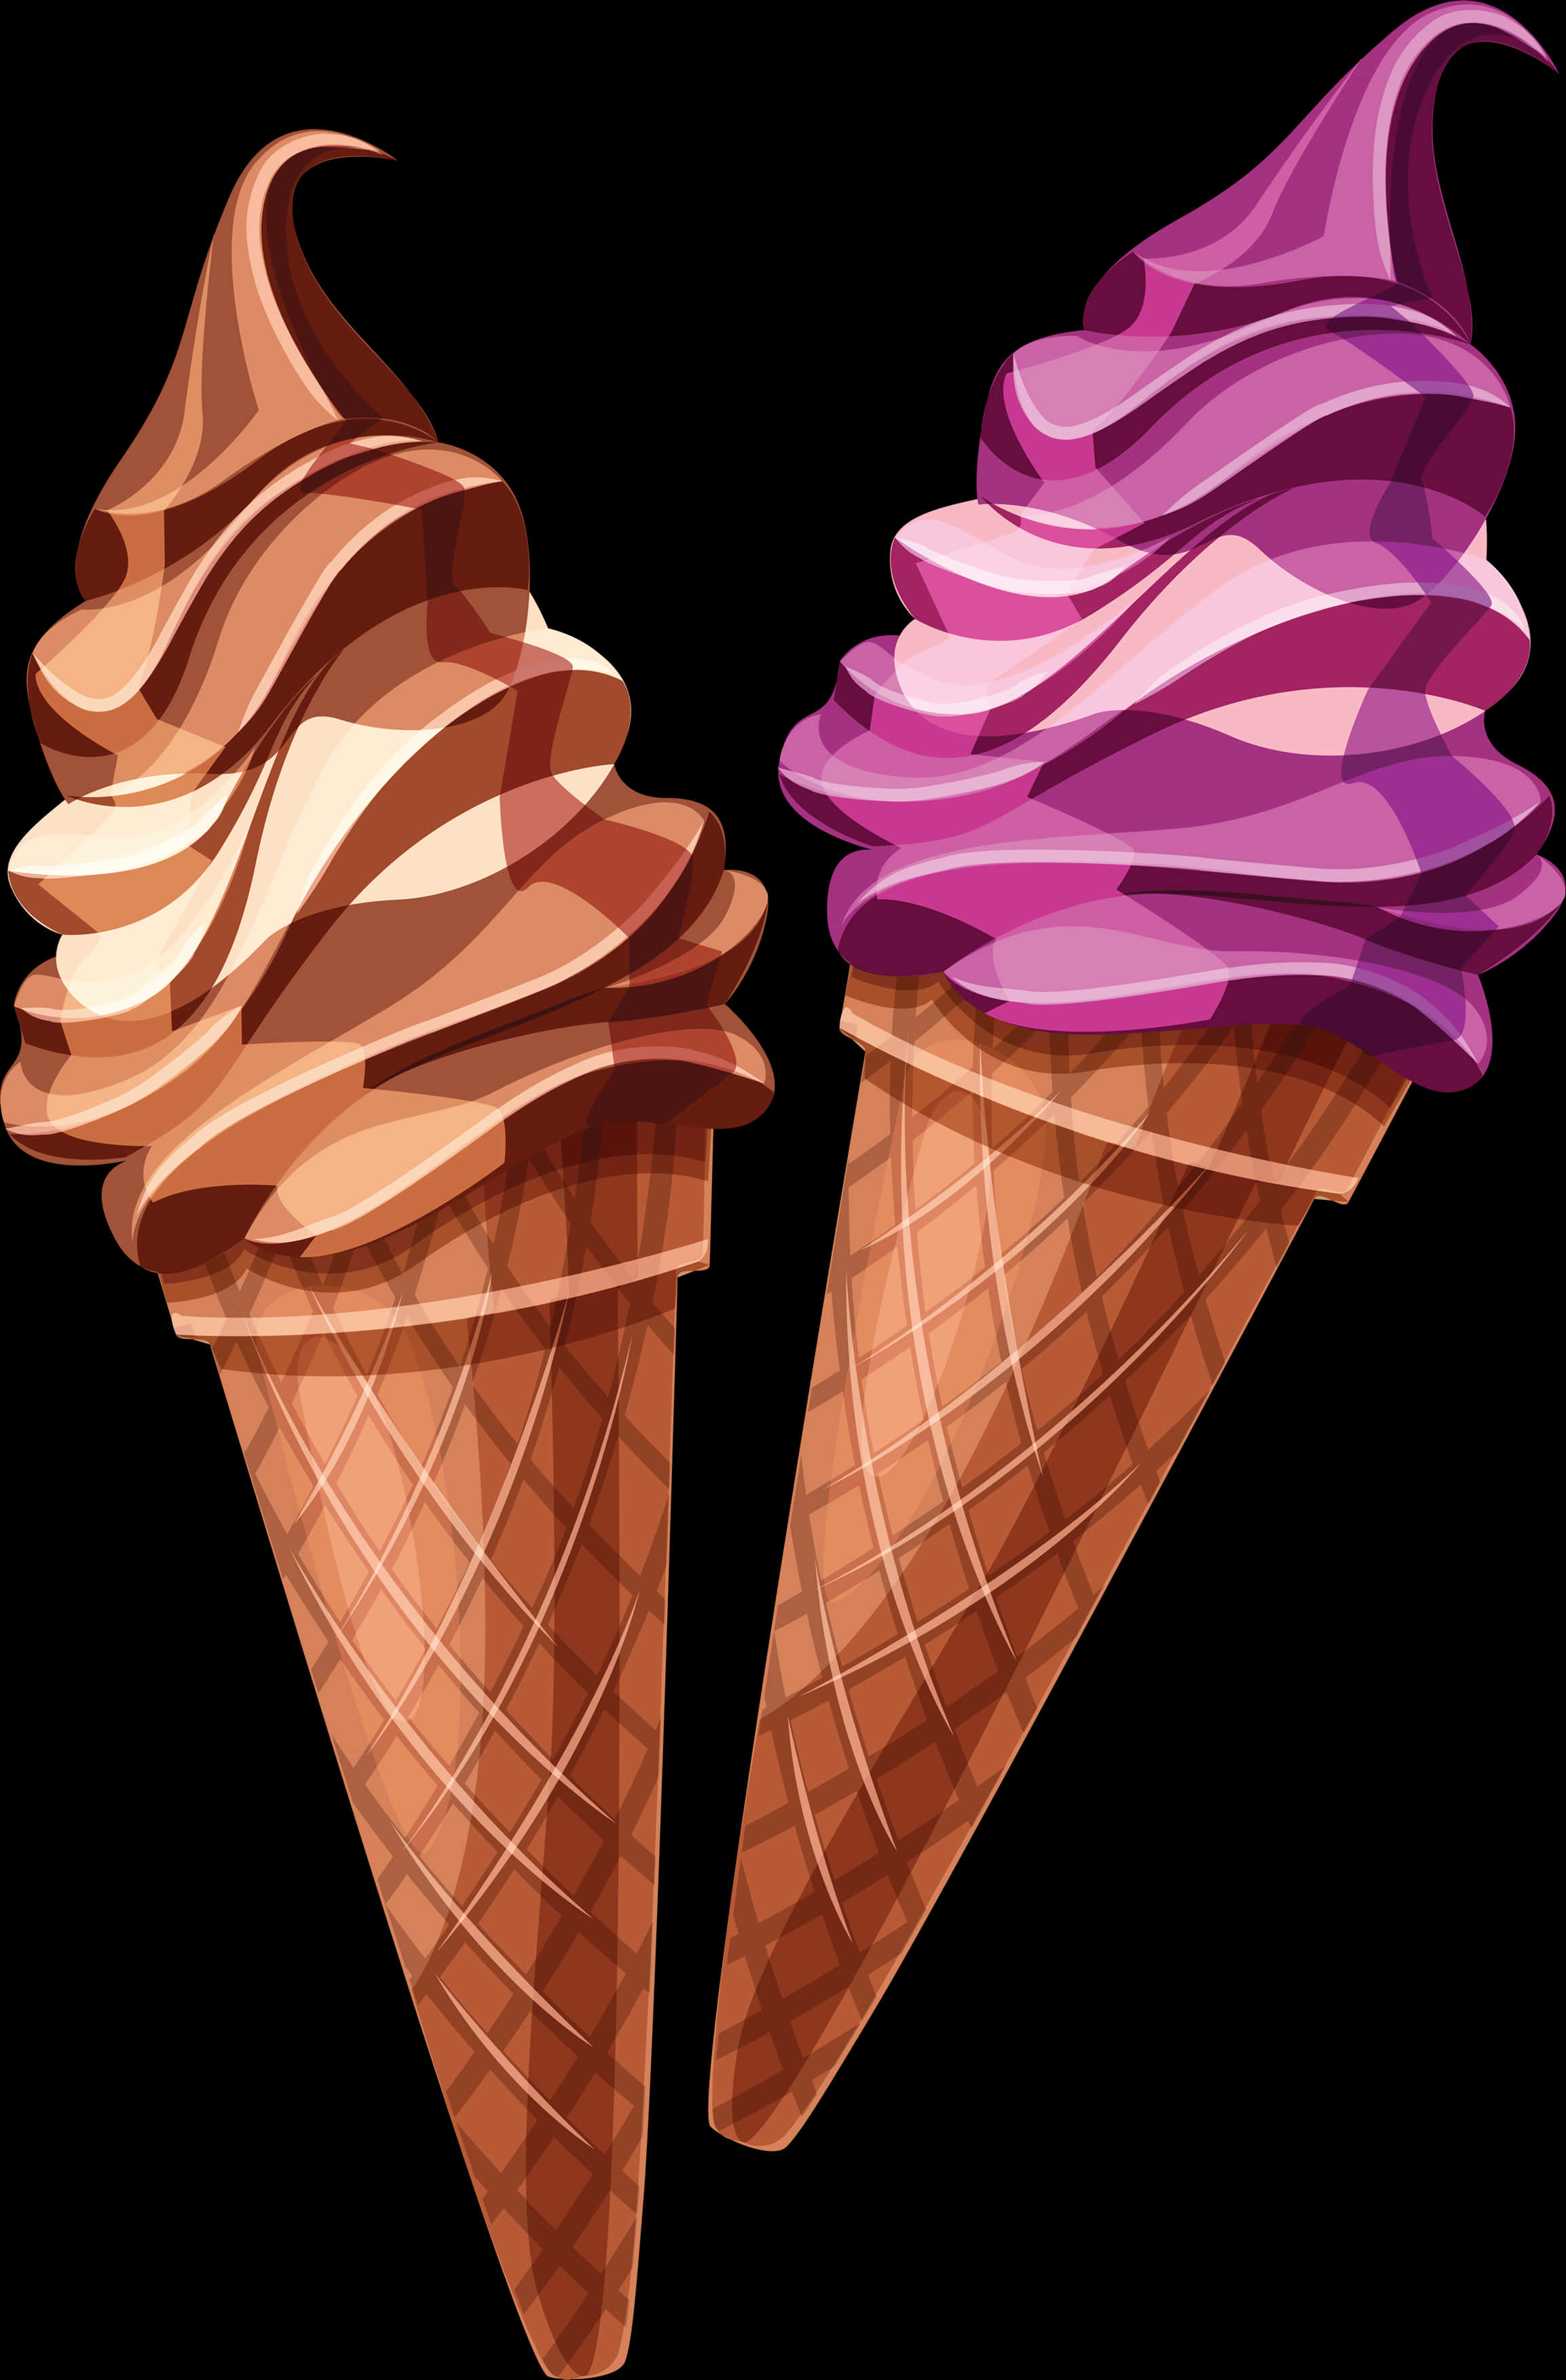 Chocolateand Purple Ice Cream Cones Clipart PNG image